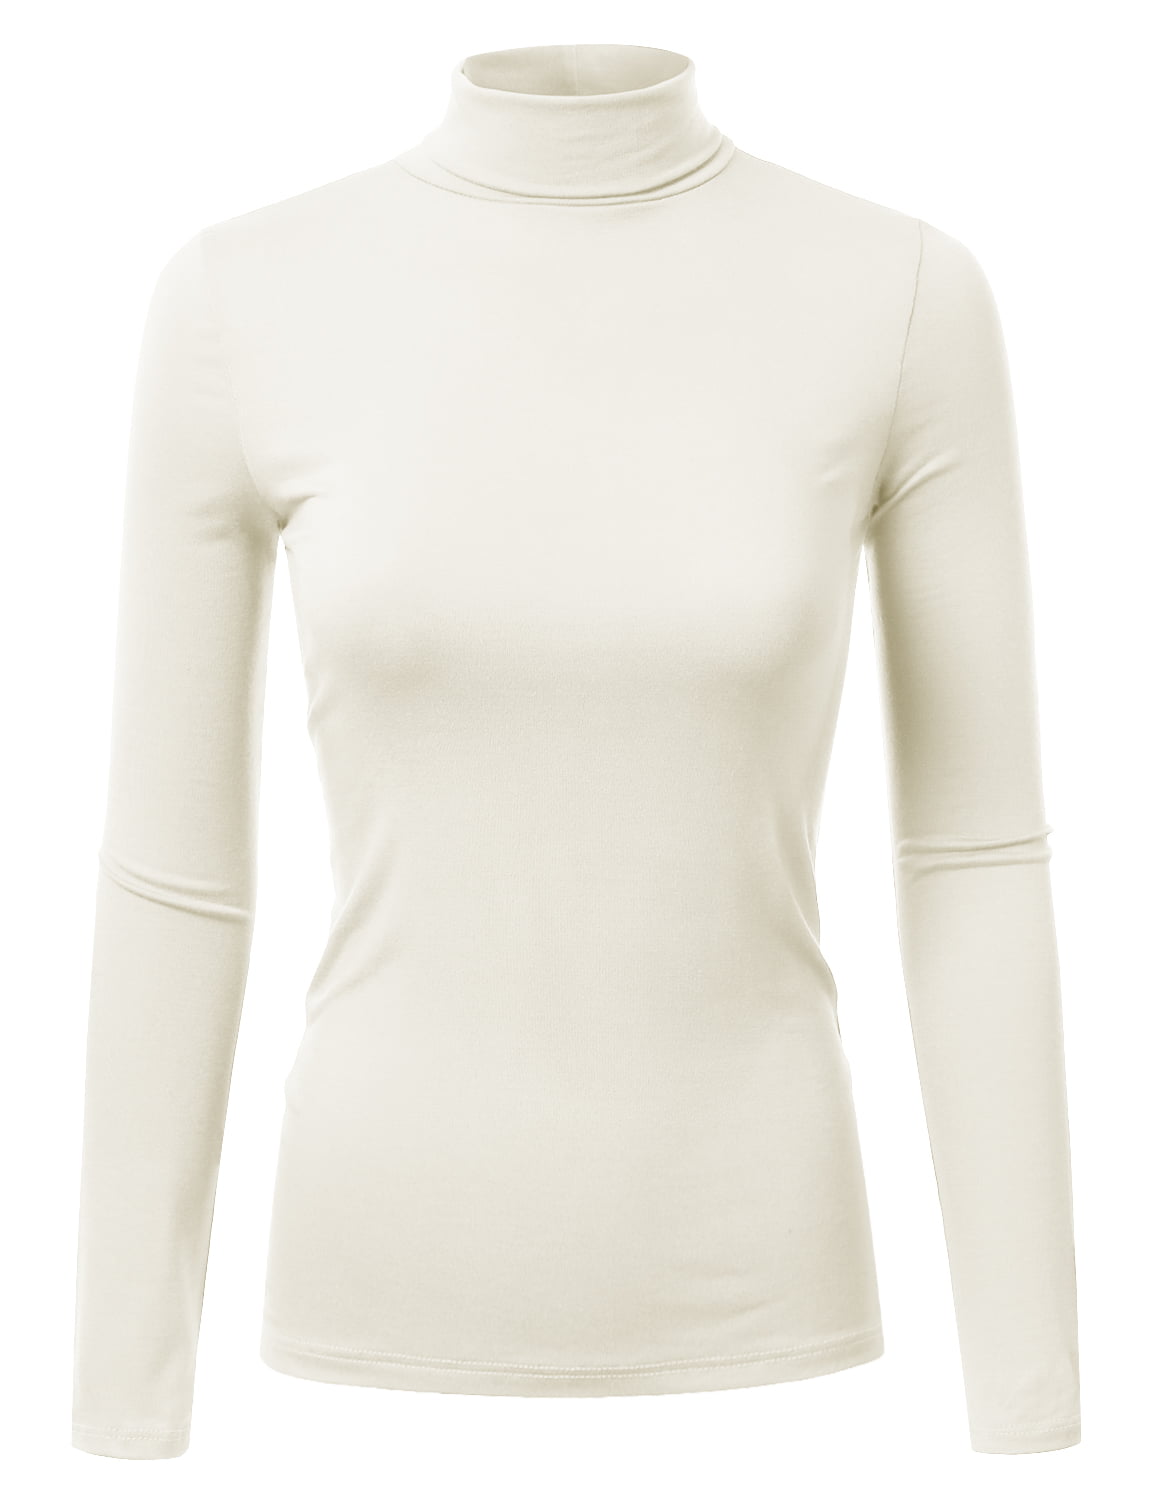 Doublju Women's Long Sleeve Turtleneck Lightweight Pullover Top Sweater with Plus Size